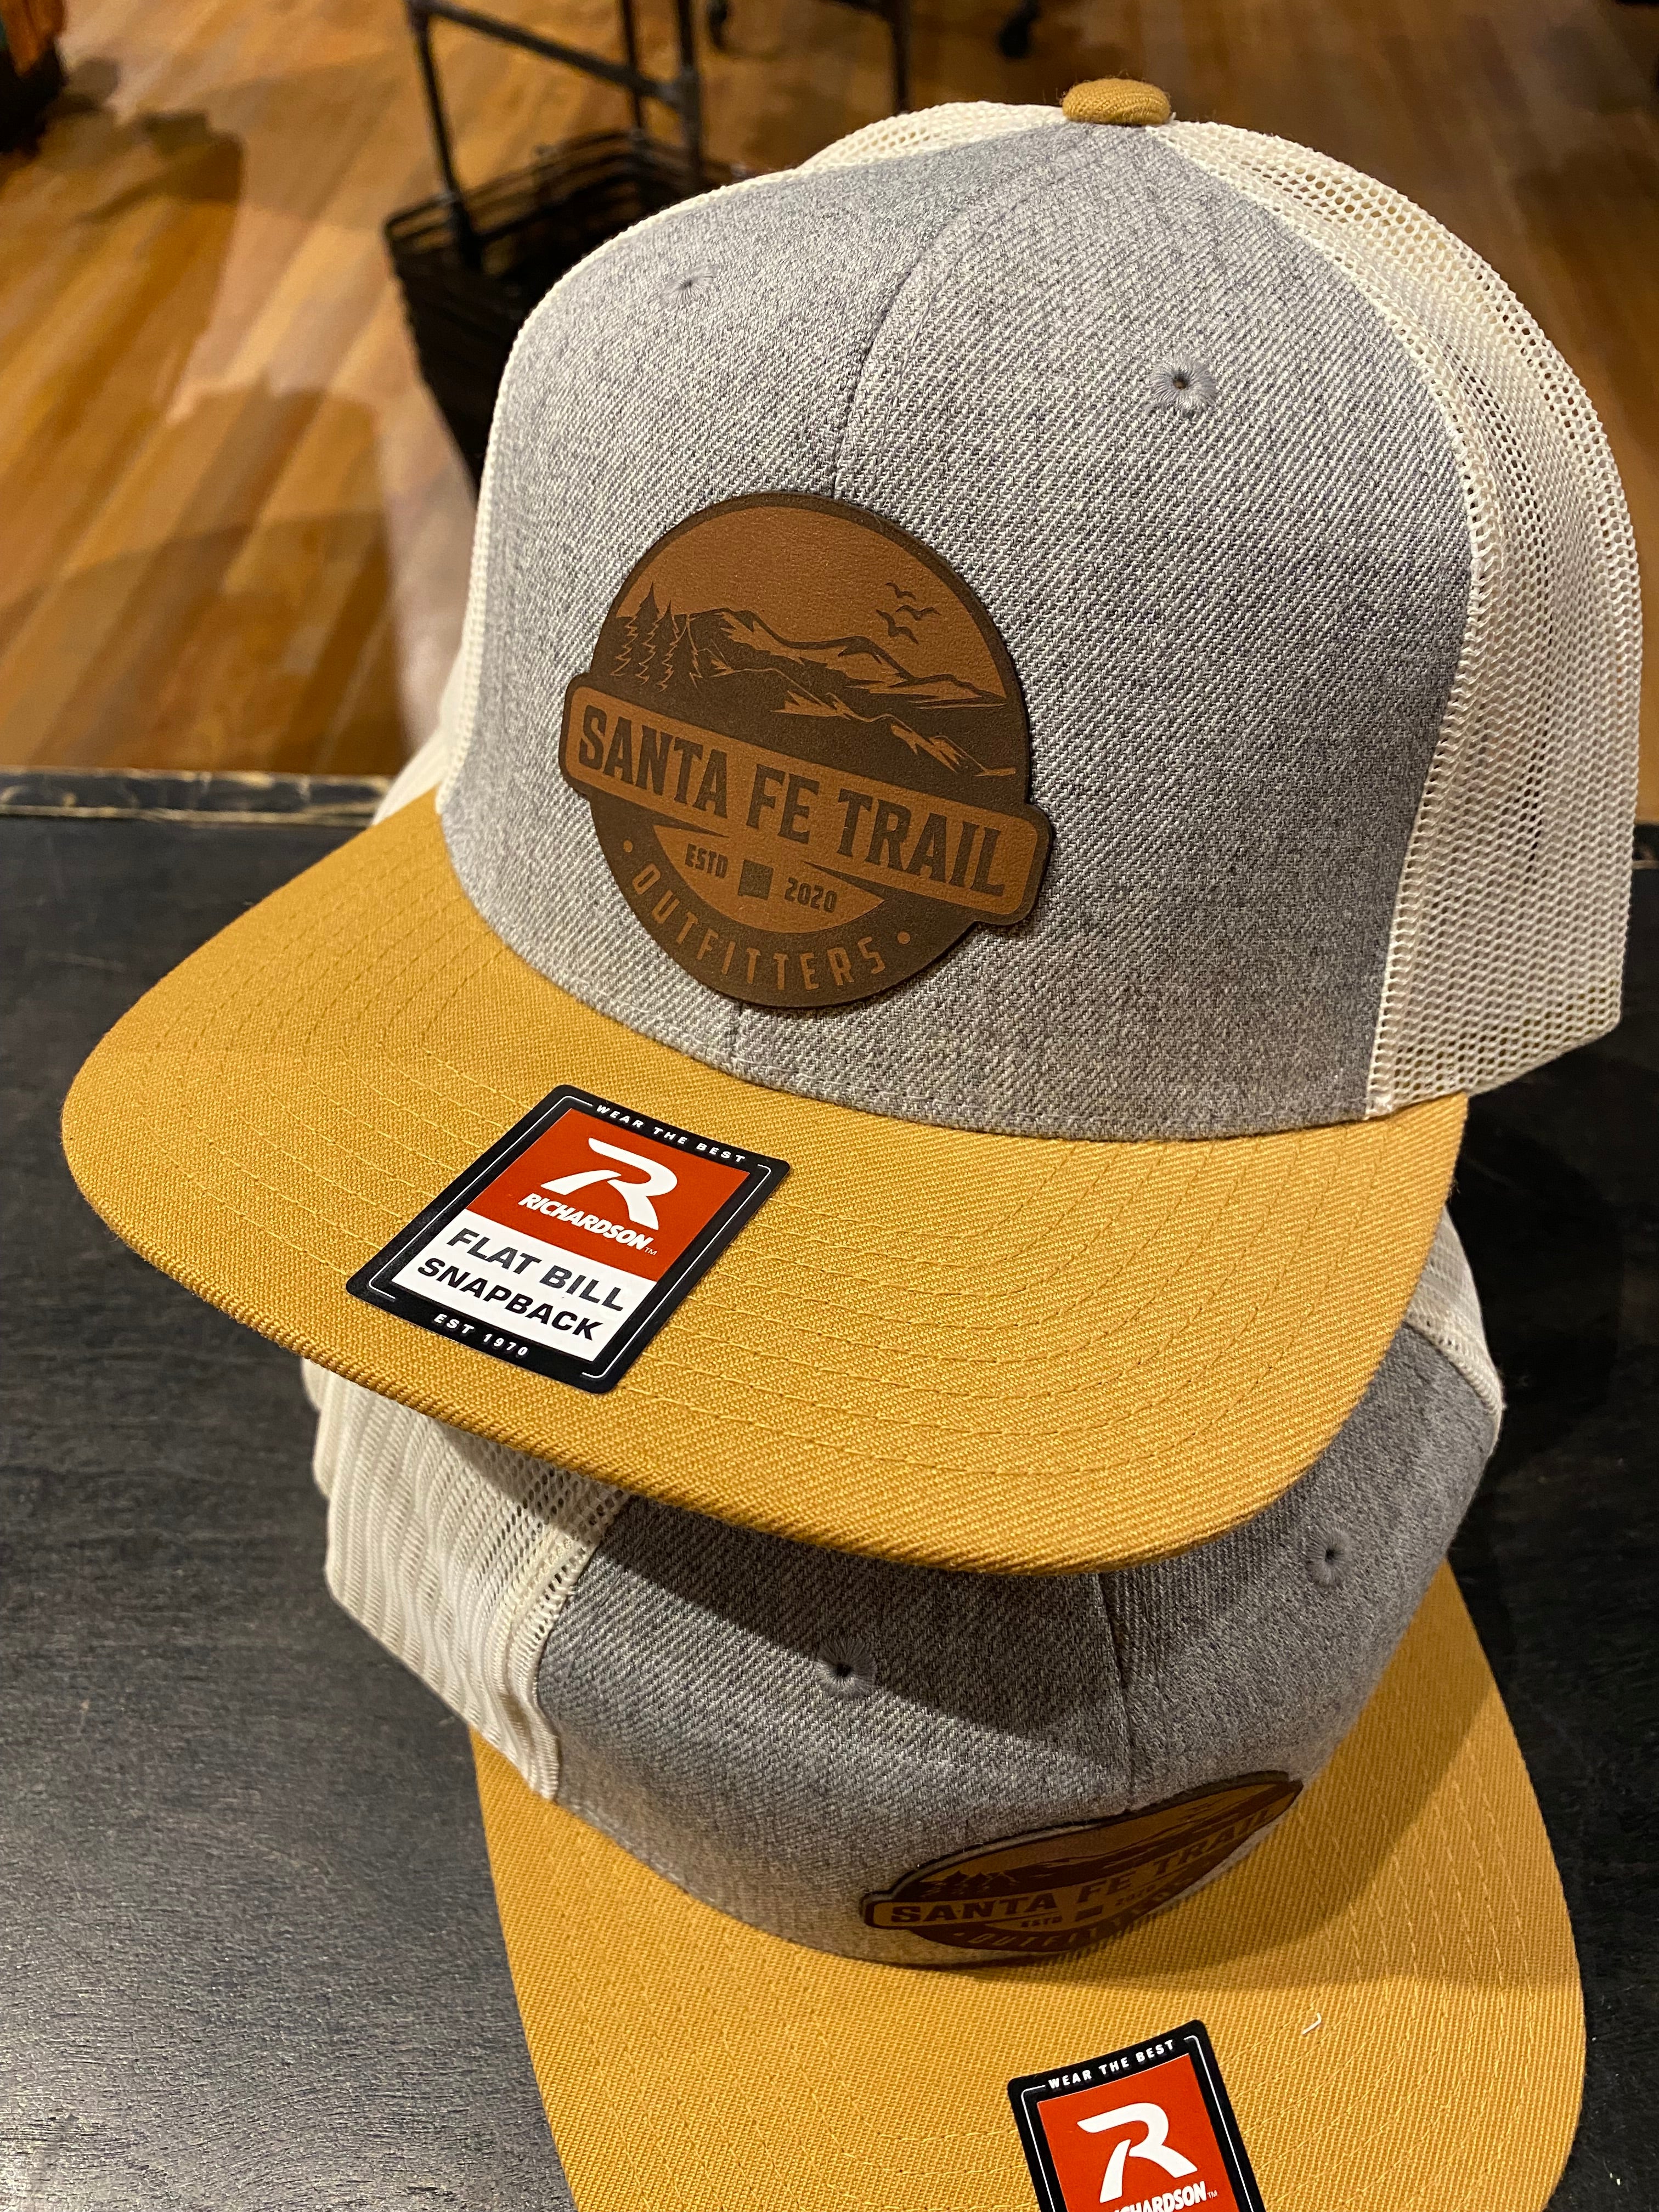 SFTO Logo Leather Patch Flat Bill Snapback Hat - Adult - Gold Grey